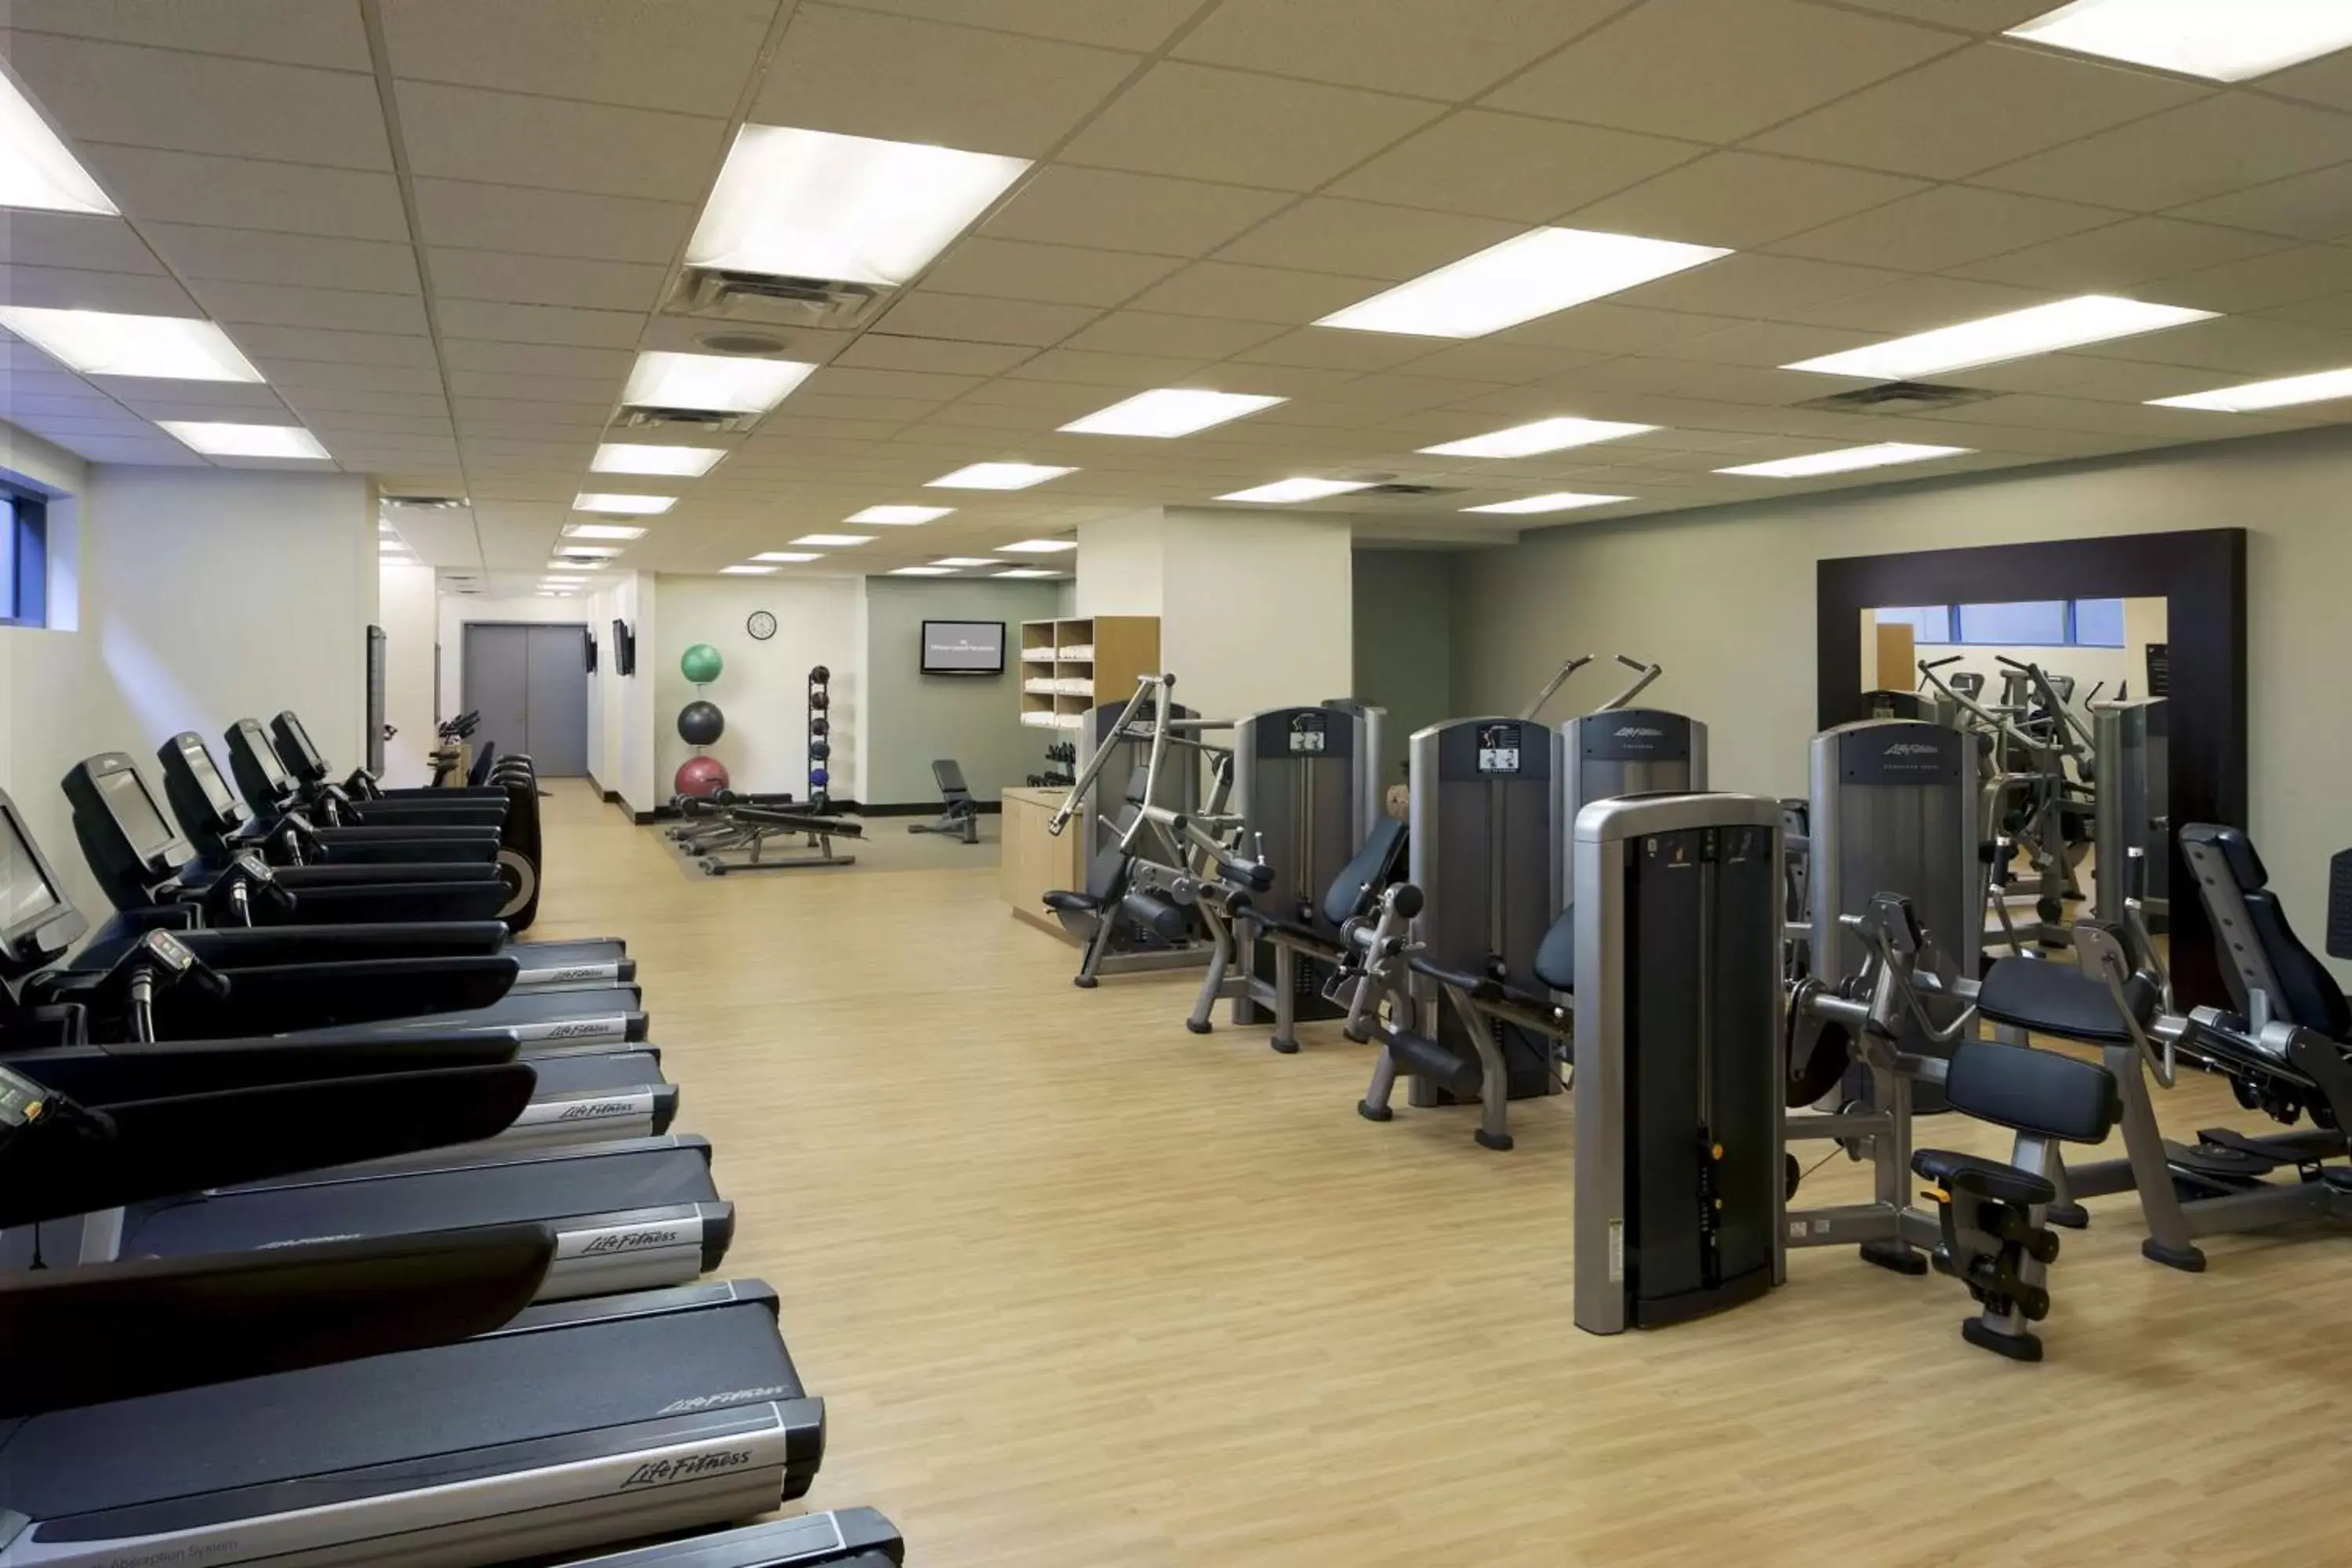 Fitness centre/facilities, Fitness Center/Facilities in Hilton Grand Vacations Club Elara Center Strip Las Vegas